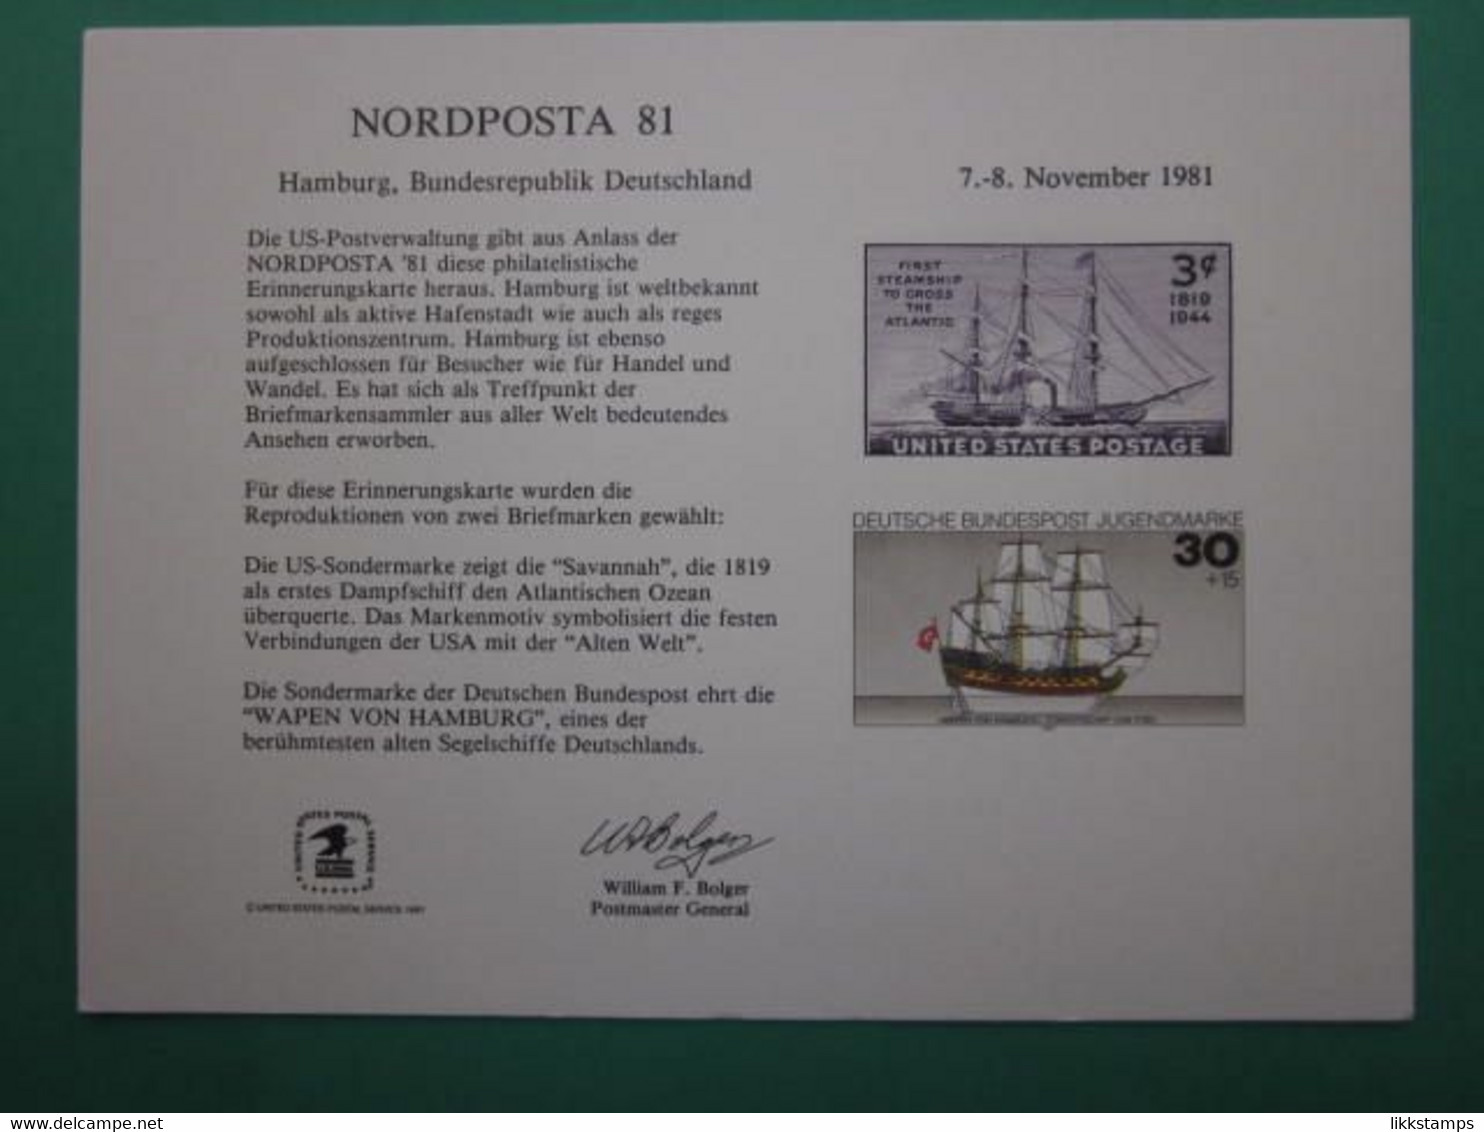 1981 A SOUVENIR CARD FOR NORDPOSTA 81, HAMBURG, GERMANY. ( 02188 ) - Souvenirkaarten